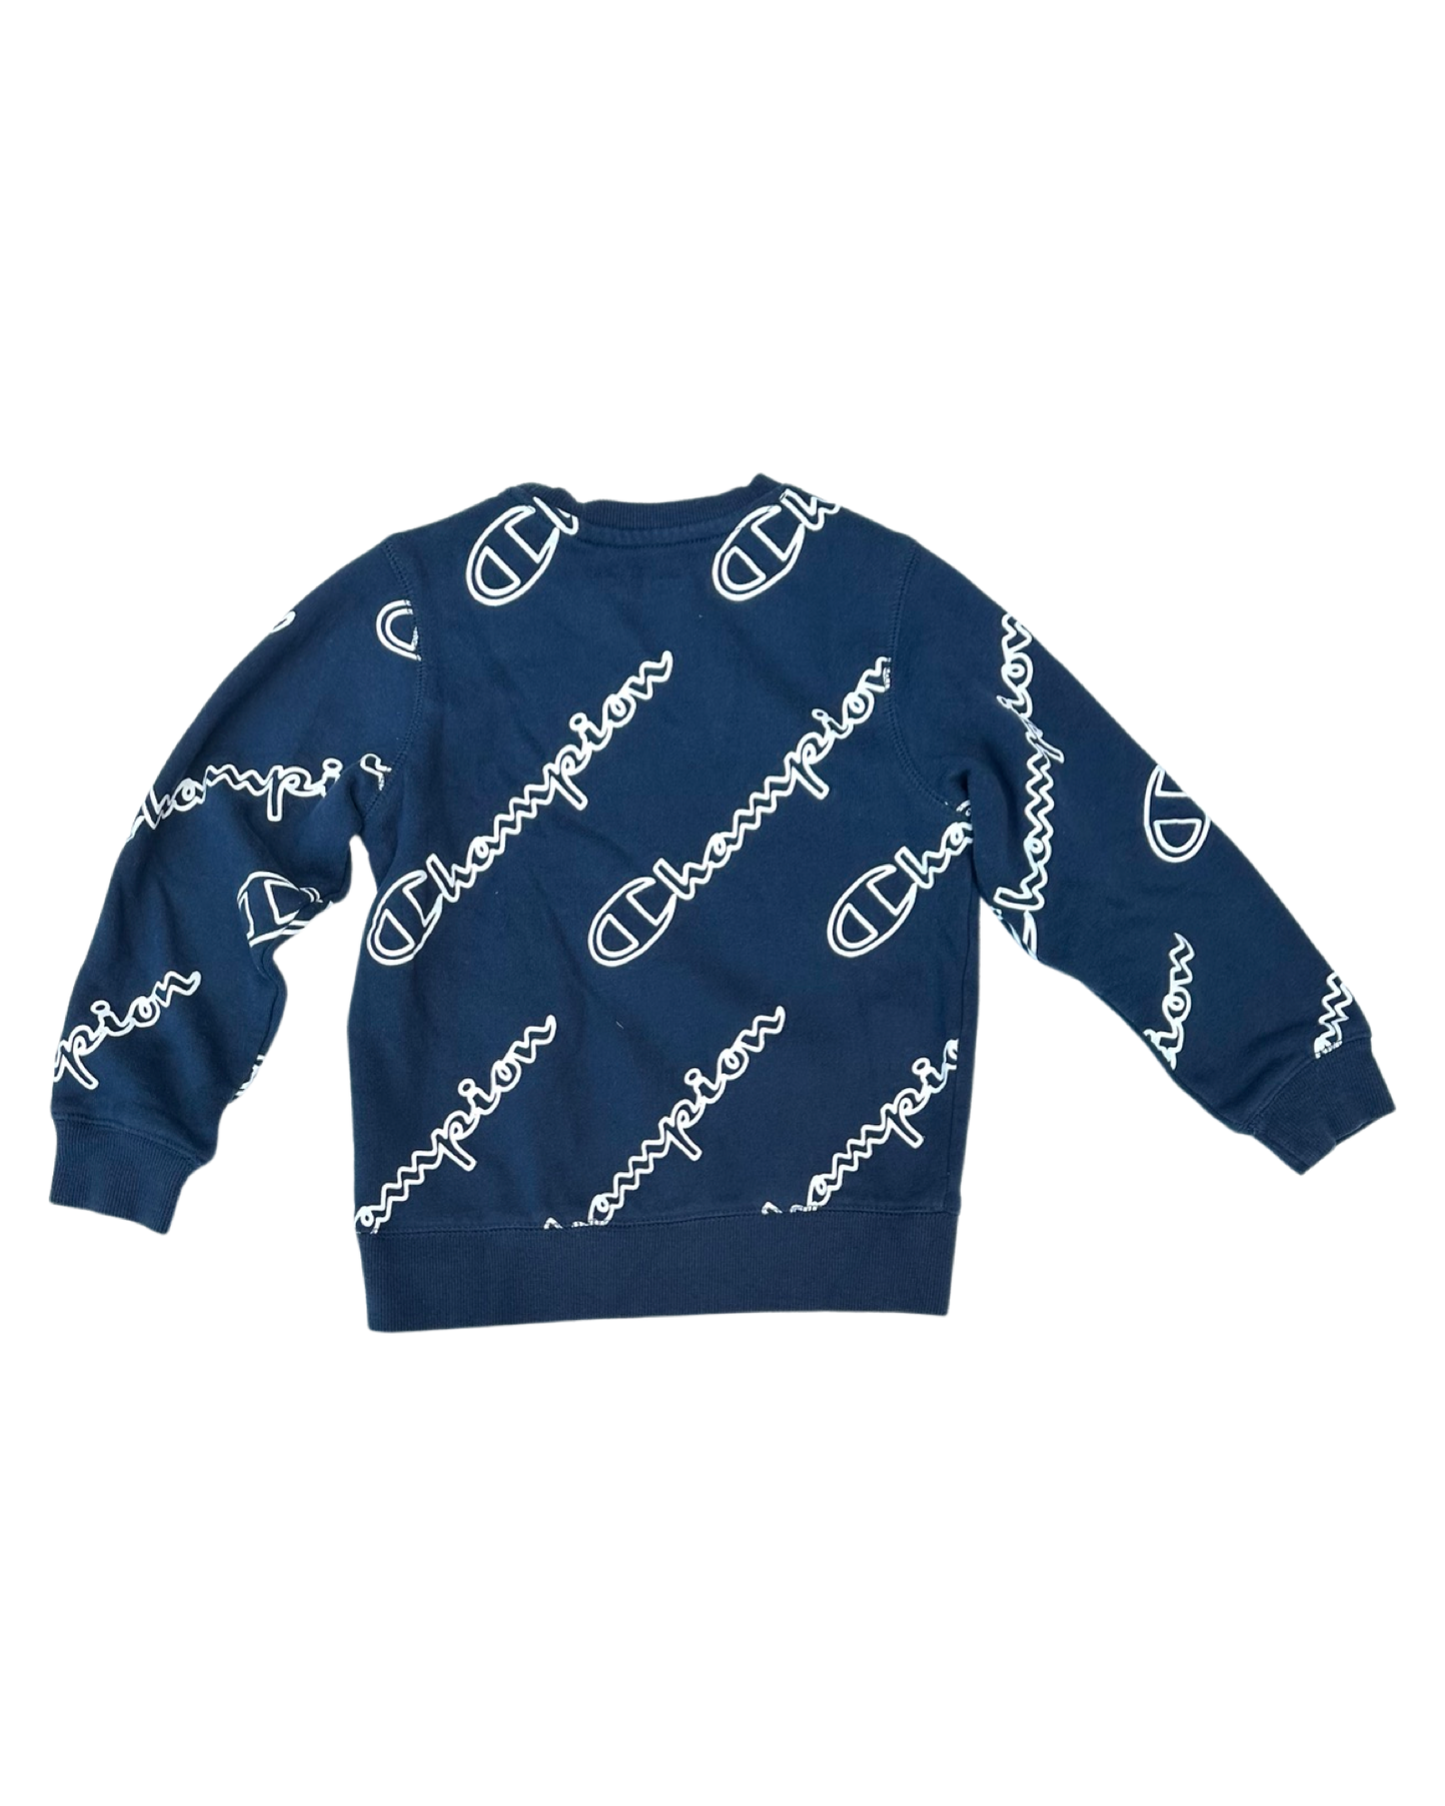 Champion navy logo print vintage sweatshirt (5-6yrs)